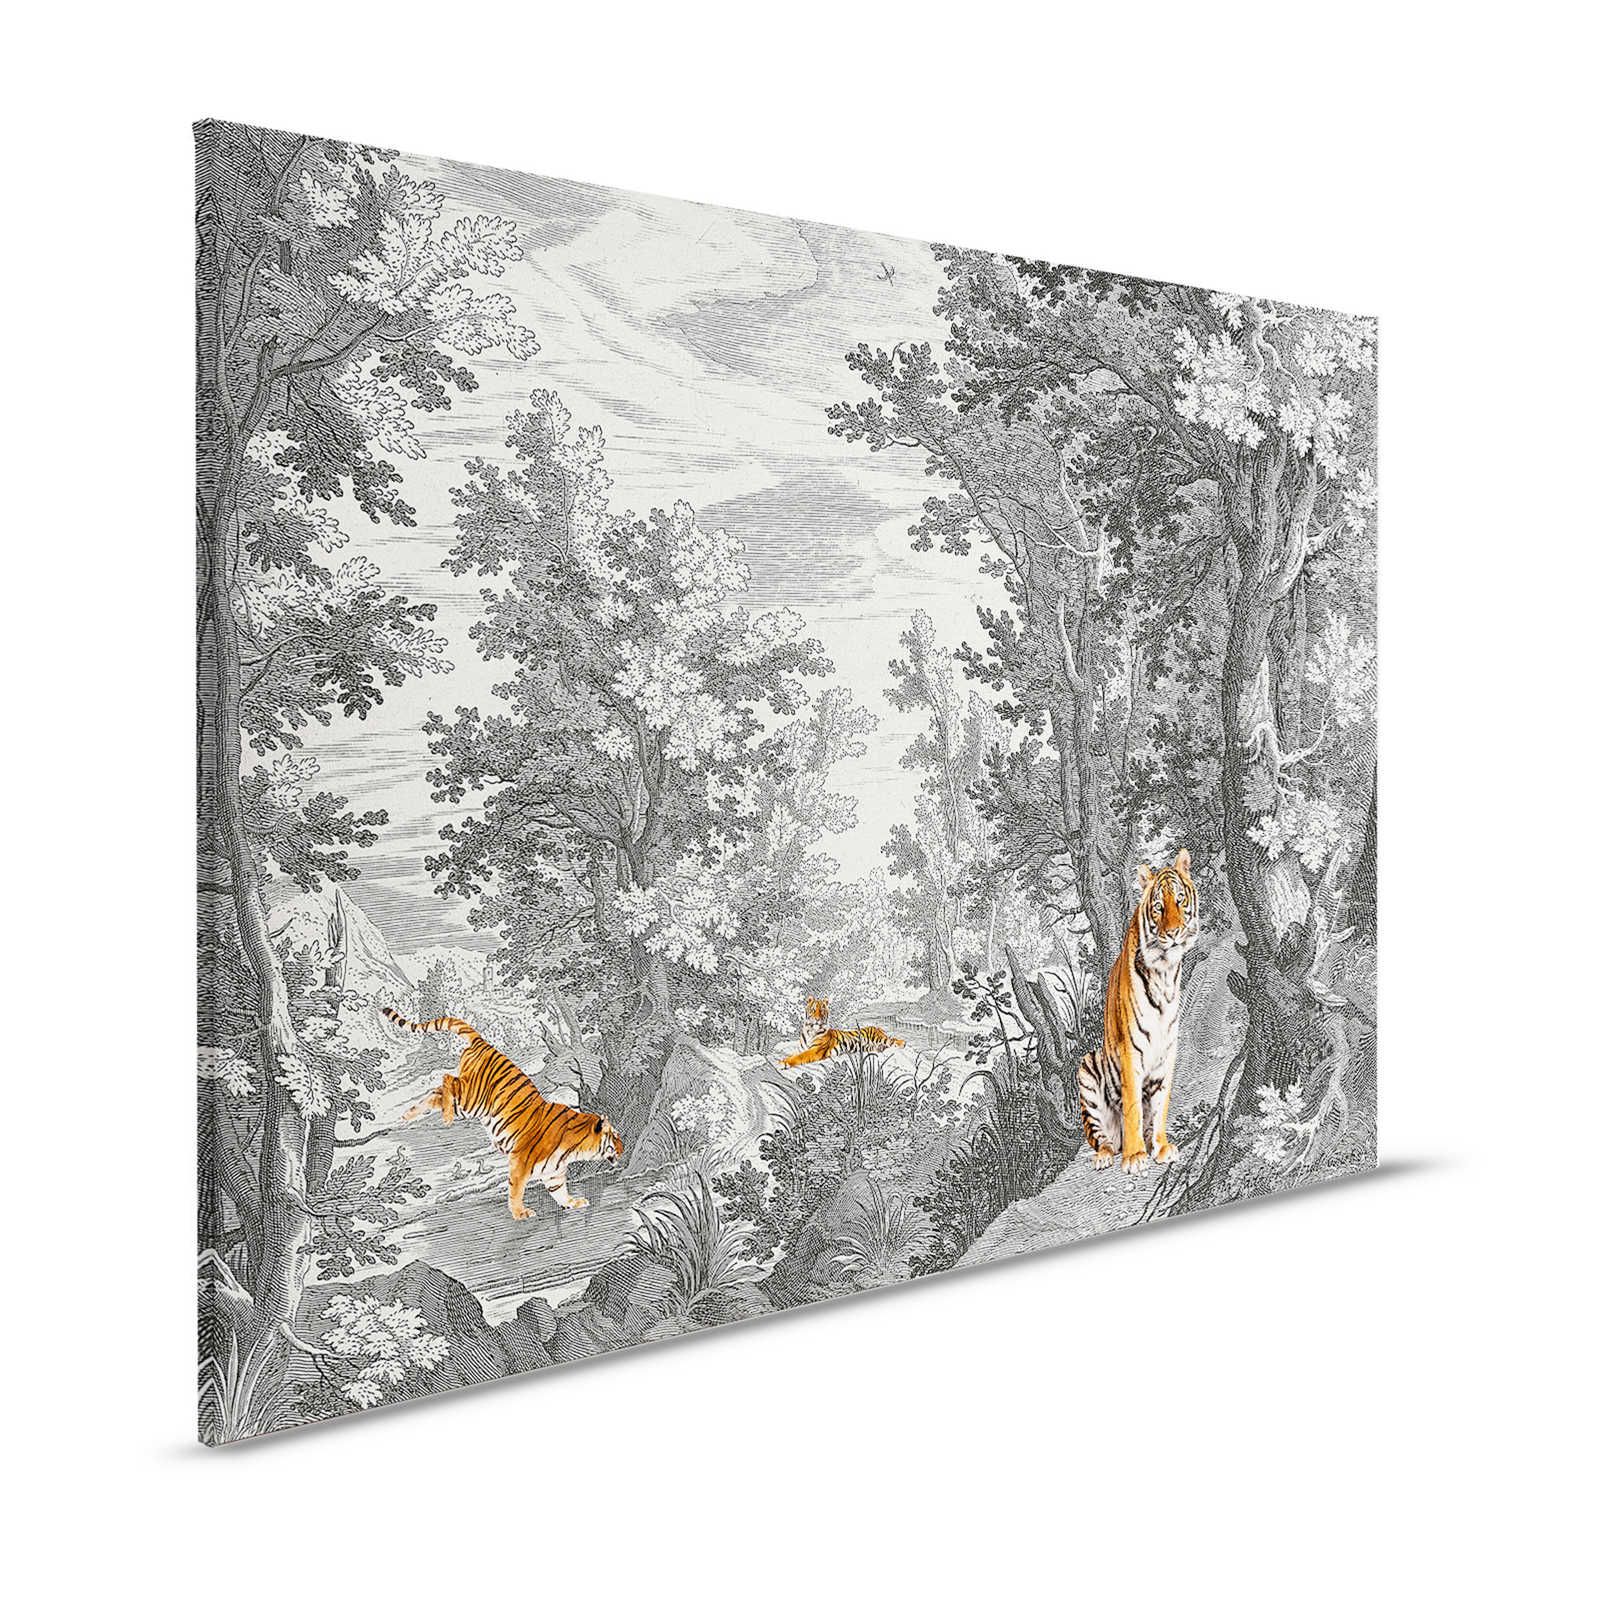         Fancy Forest 2 - Leinwandbild Landschaftsbild Klassik mit Tiger – 1,20 m x 0,80 m
    